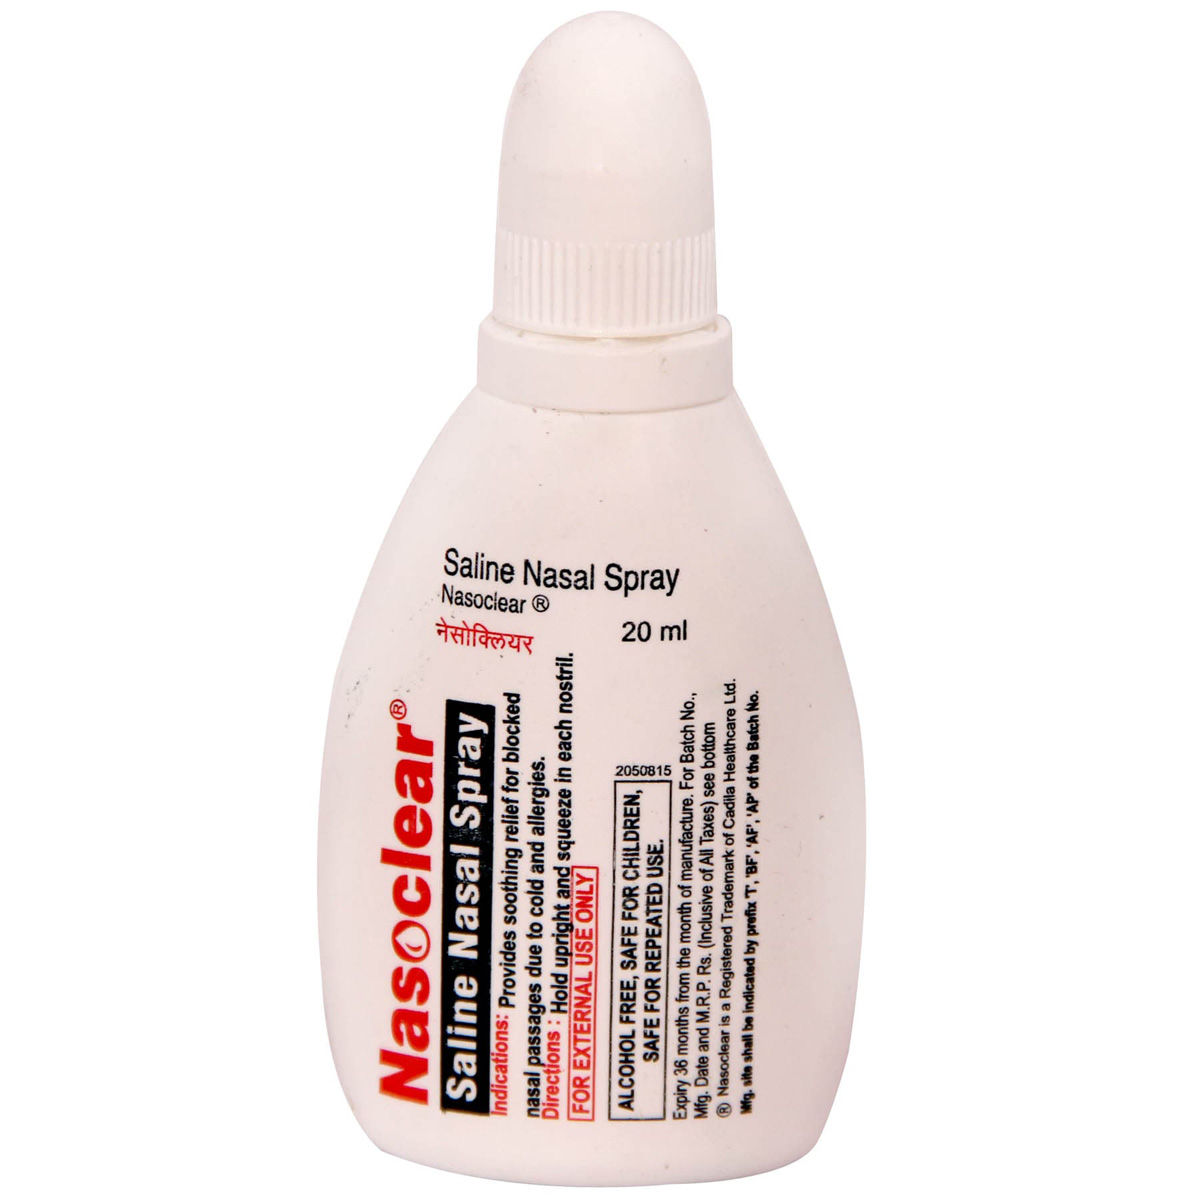 Buy Nasoclear Saline Nasal Spray, 20 ml Online